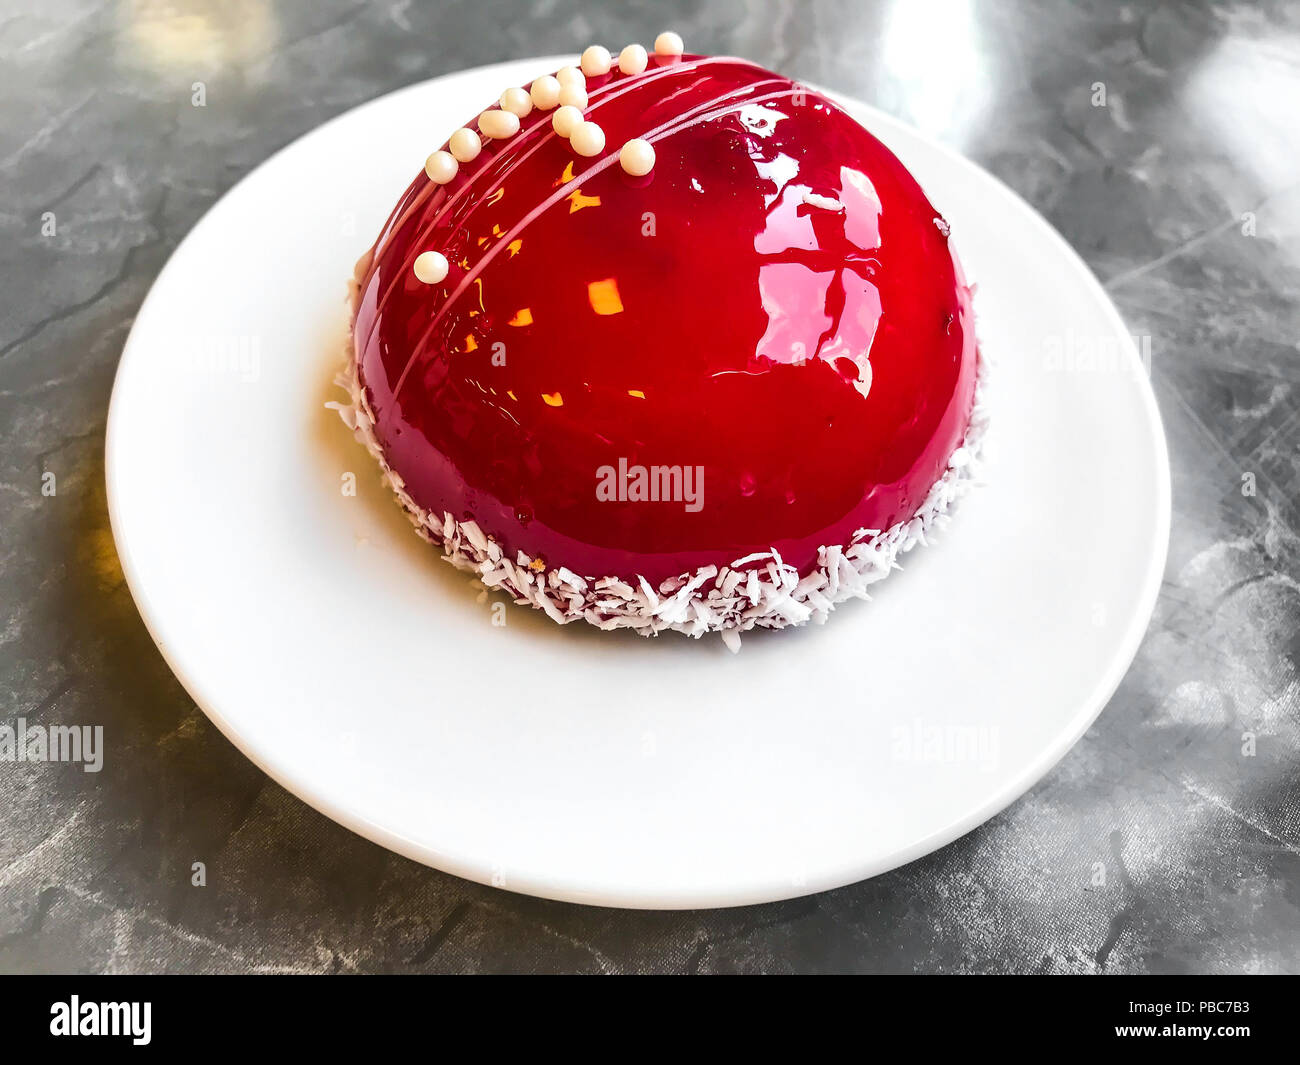 Mousse Cake mit rot Spiegel Glasur. Studio Foto Stockfotografie - Alamy